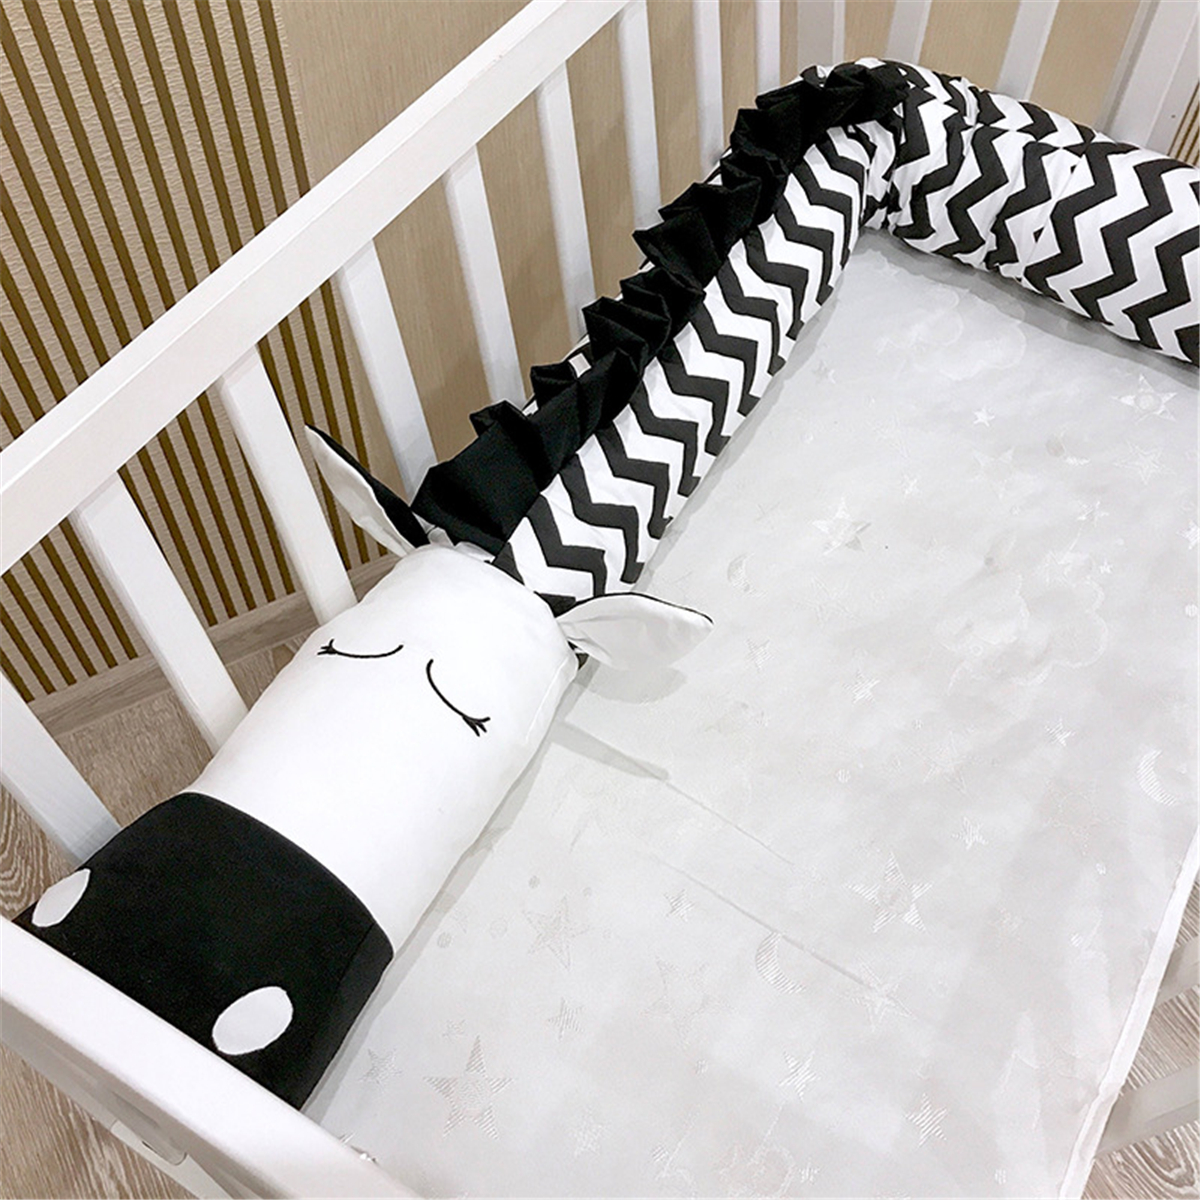 

Детские Крокодил Zebra Shaped Подушка Хлопок Подушка Детская Кроватка Бампер Протектор